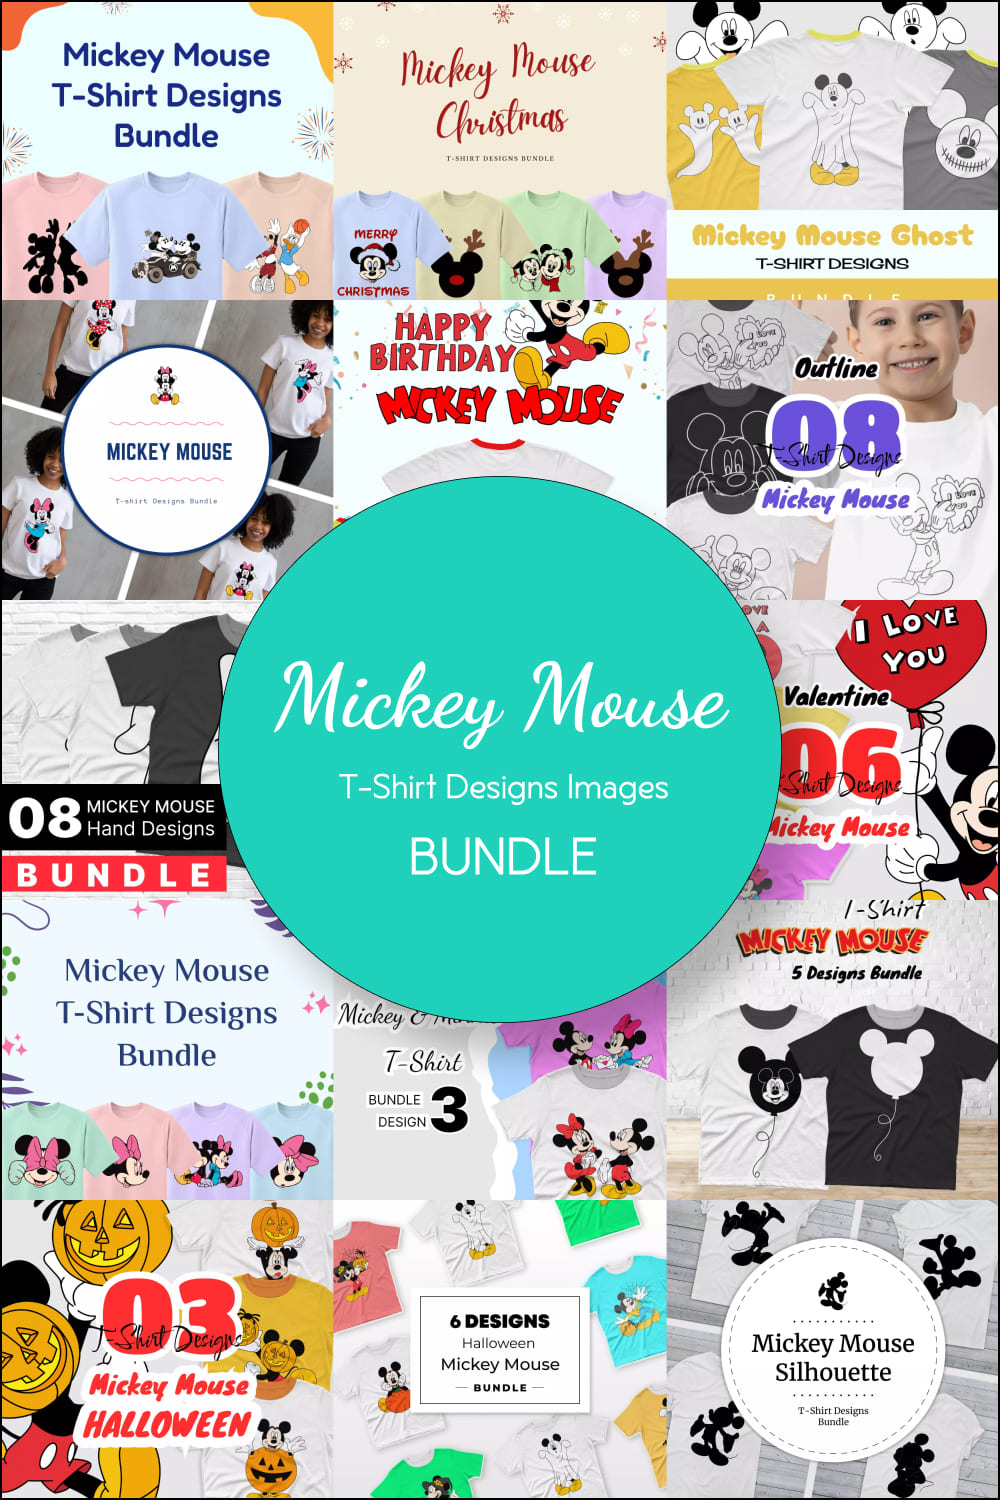 Mickey Mouse T-shirt Design Images Bundle - Pinterest.